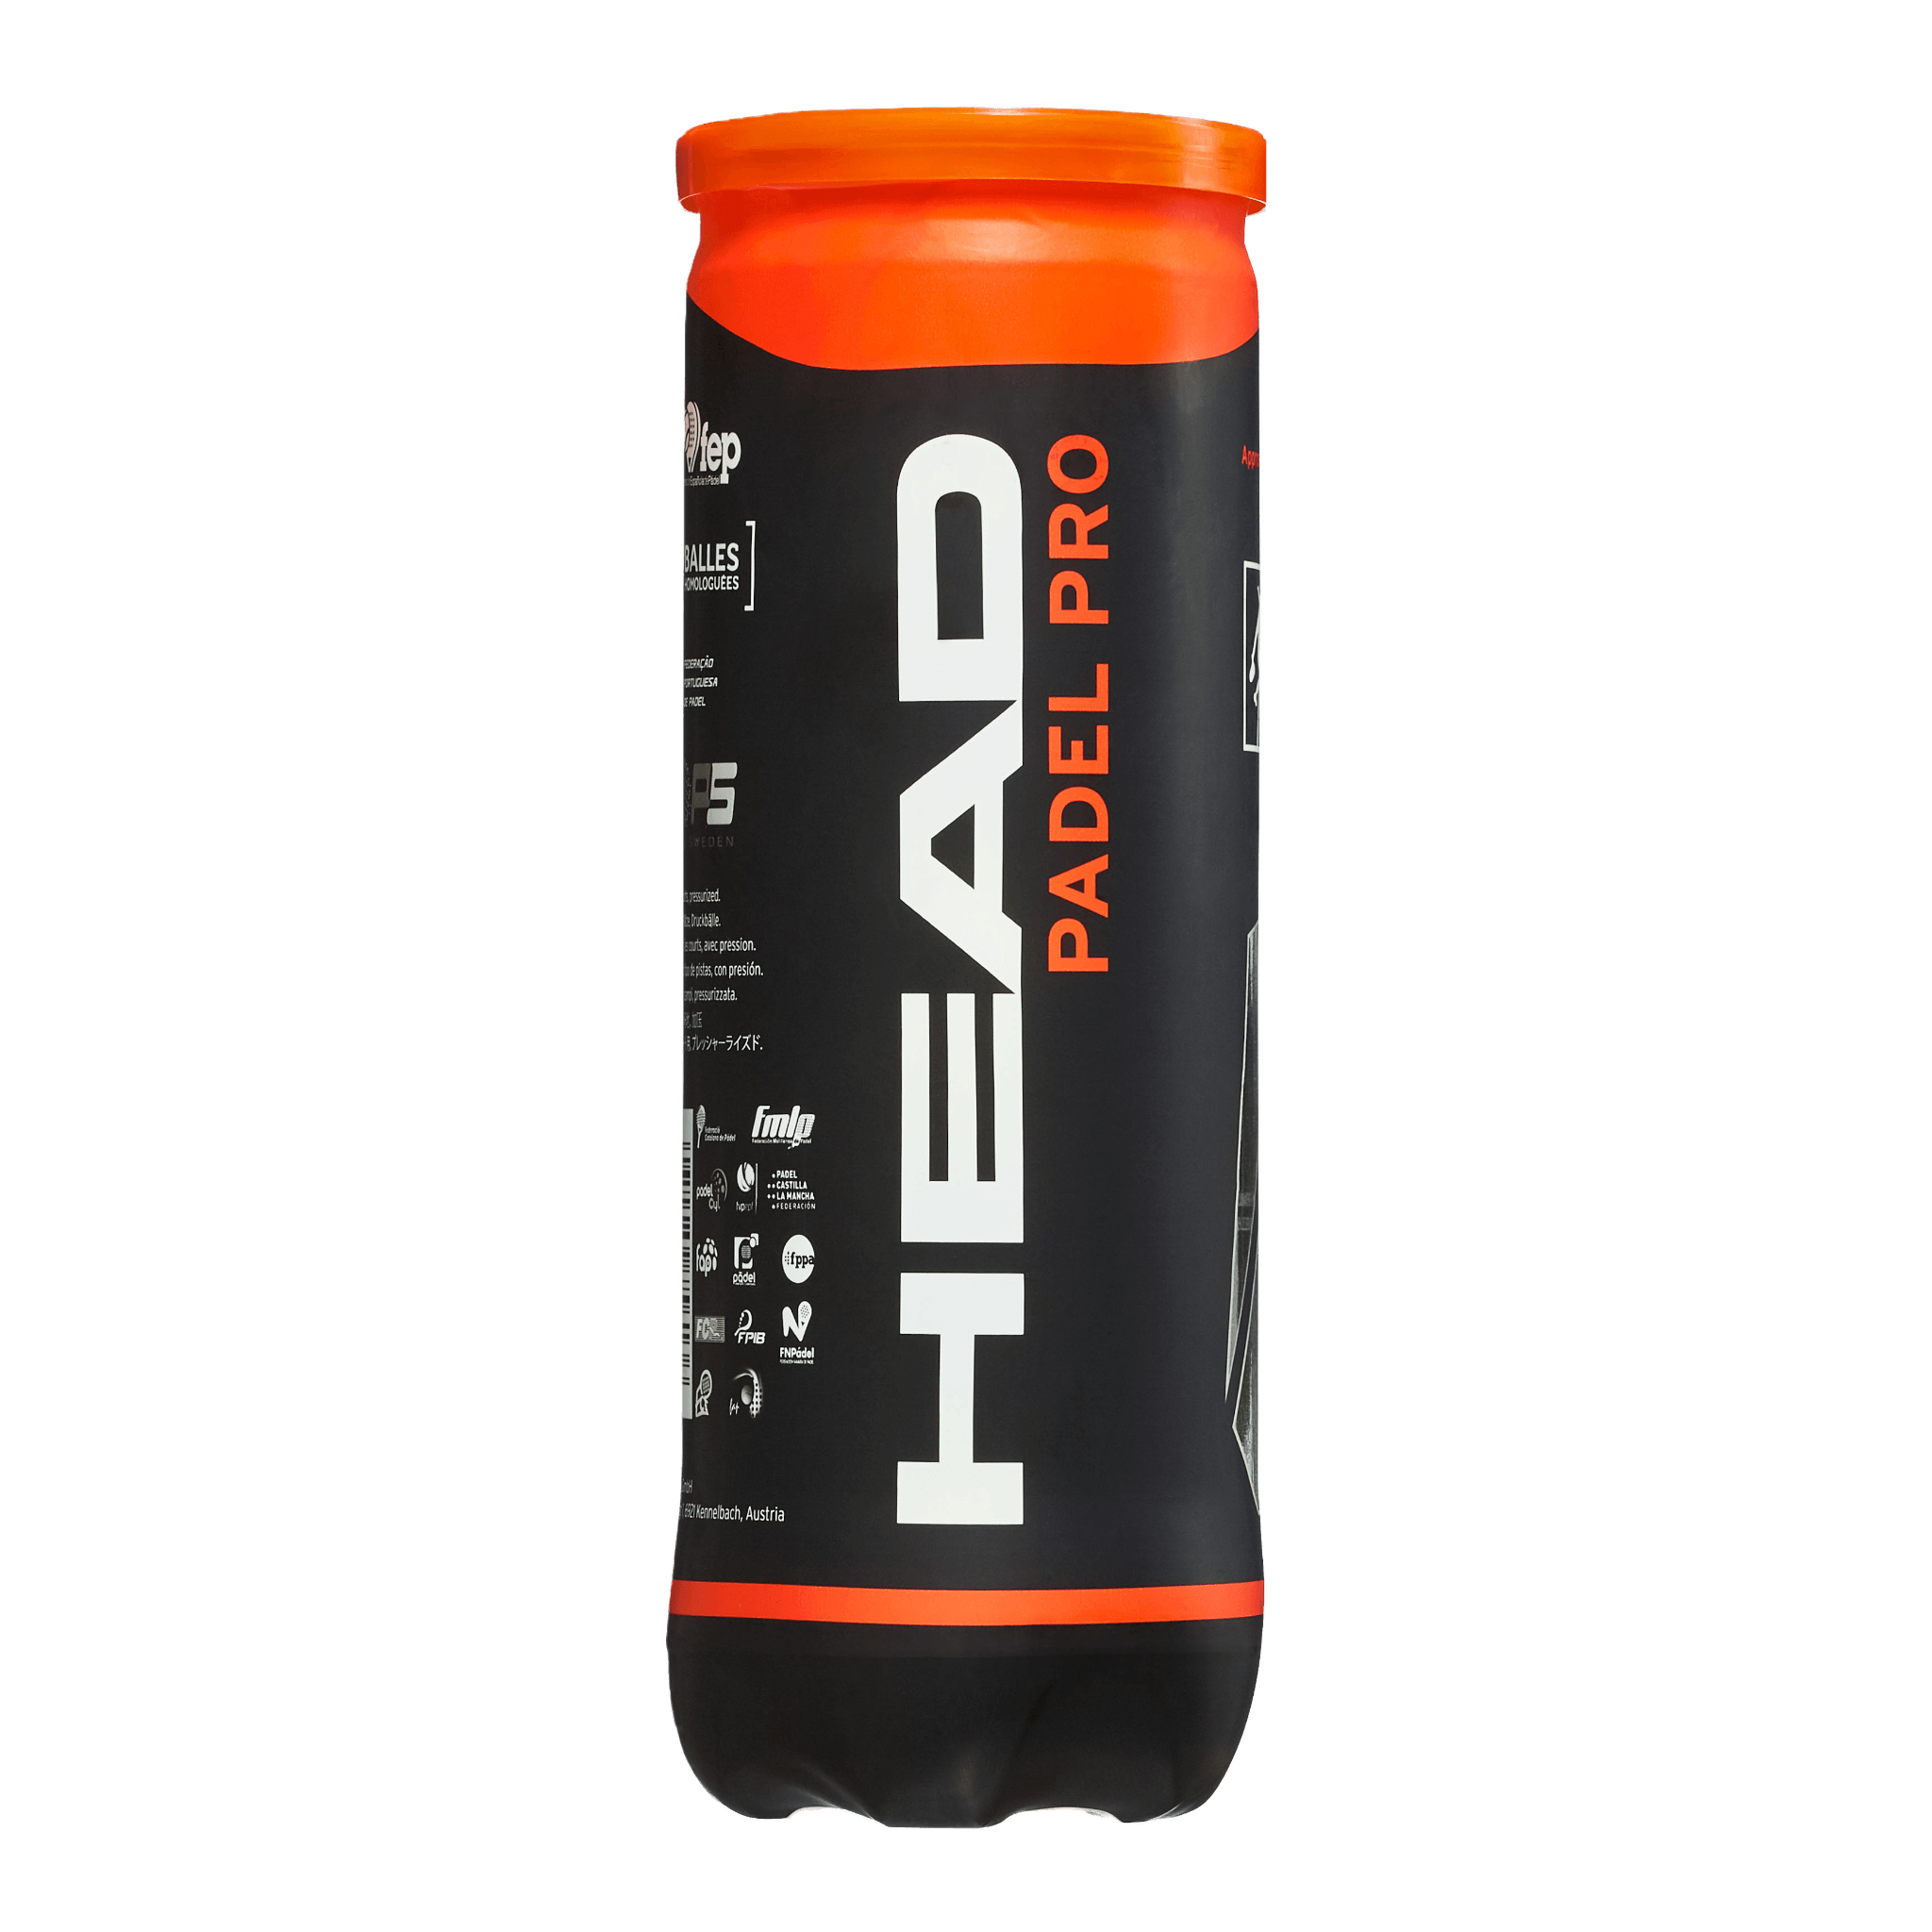 HEAD Combideal | HEAD Evo Delta padelracket + HEAD Base medium padeltas zwart / oranje + 2x HEAD Padel Pro padelballen - PadelAmigos